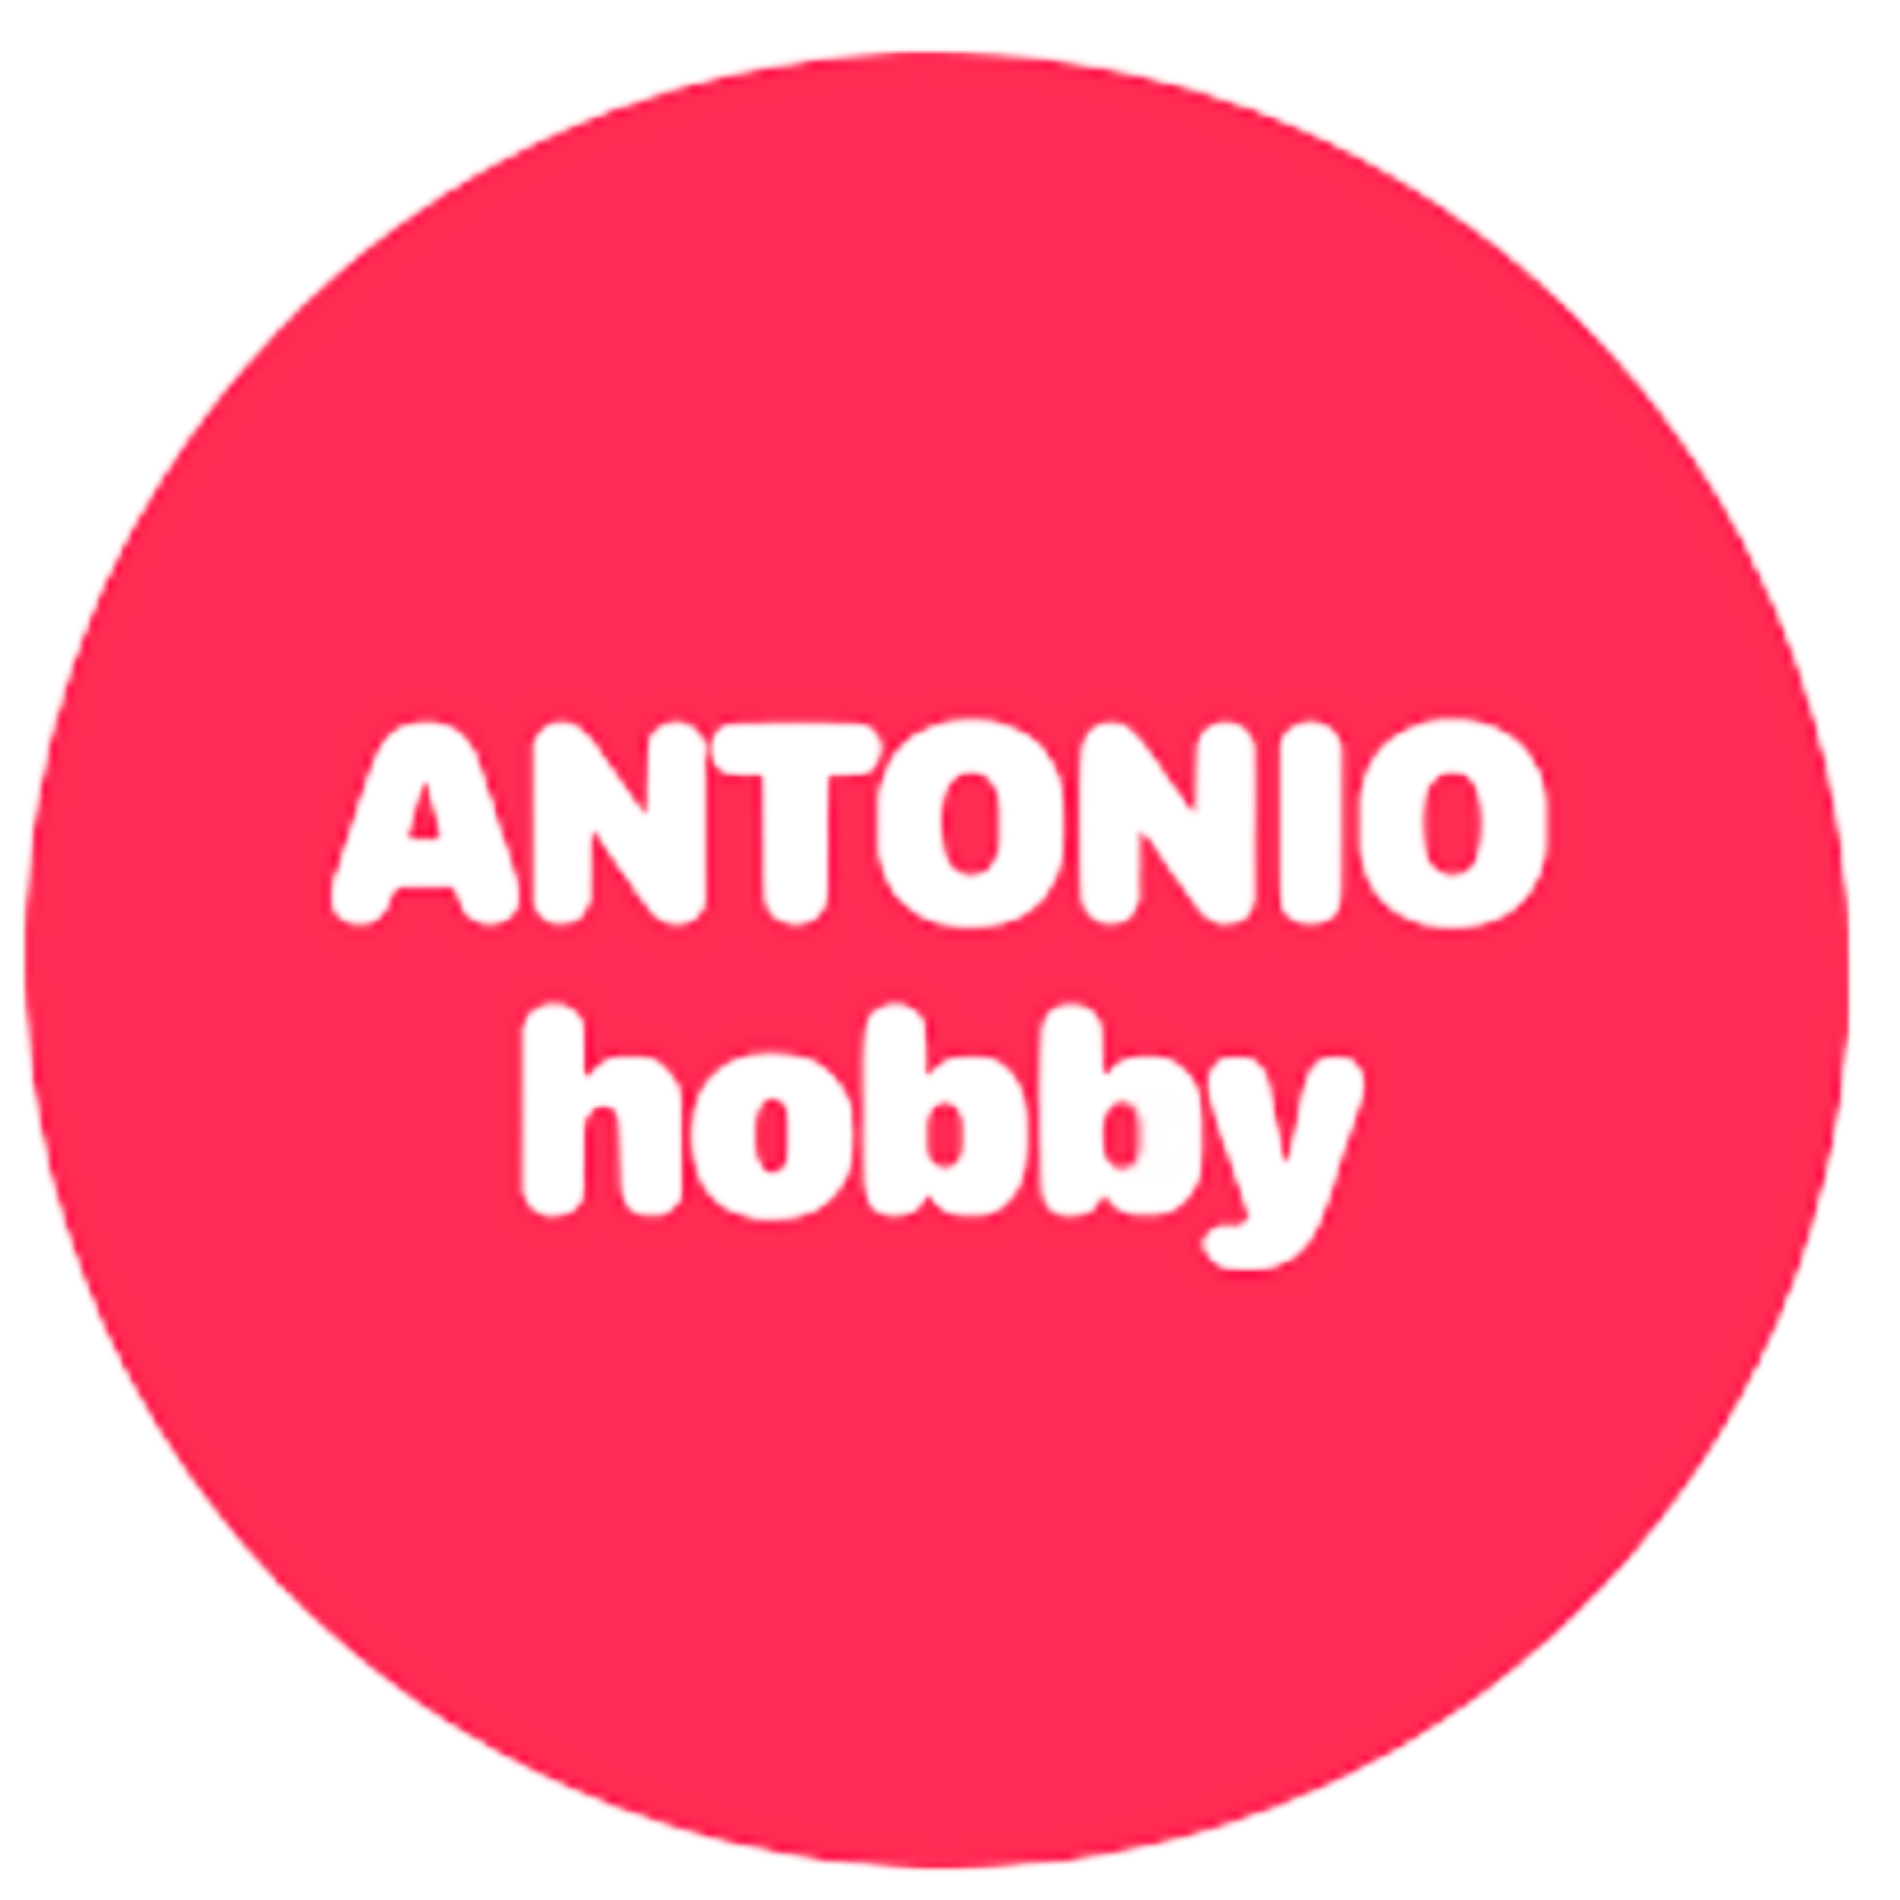 ANTONIO HOBBY